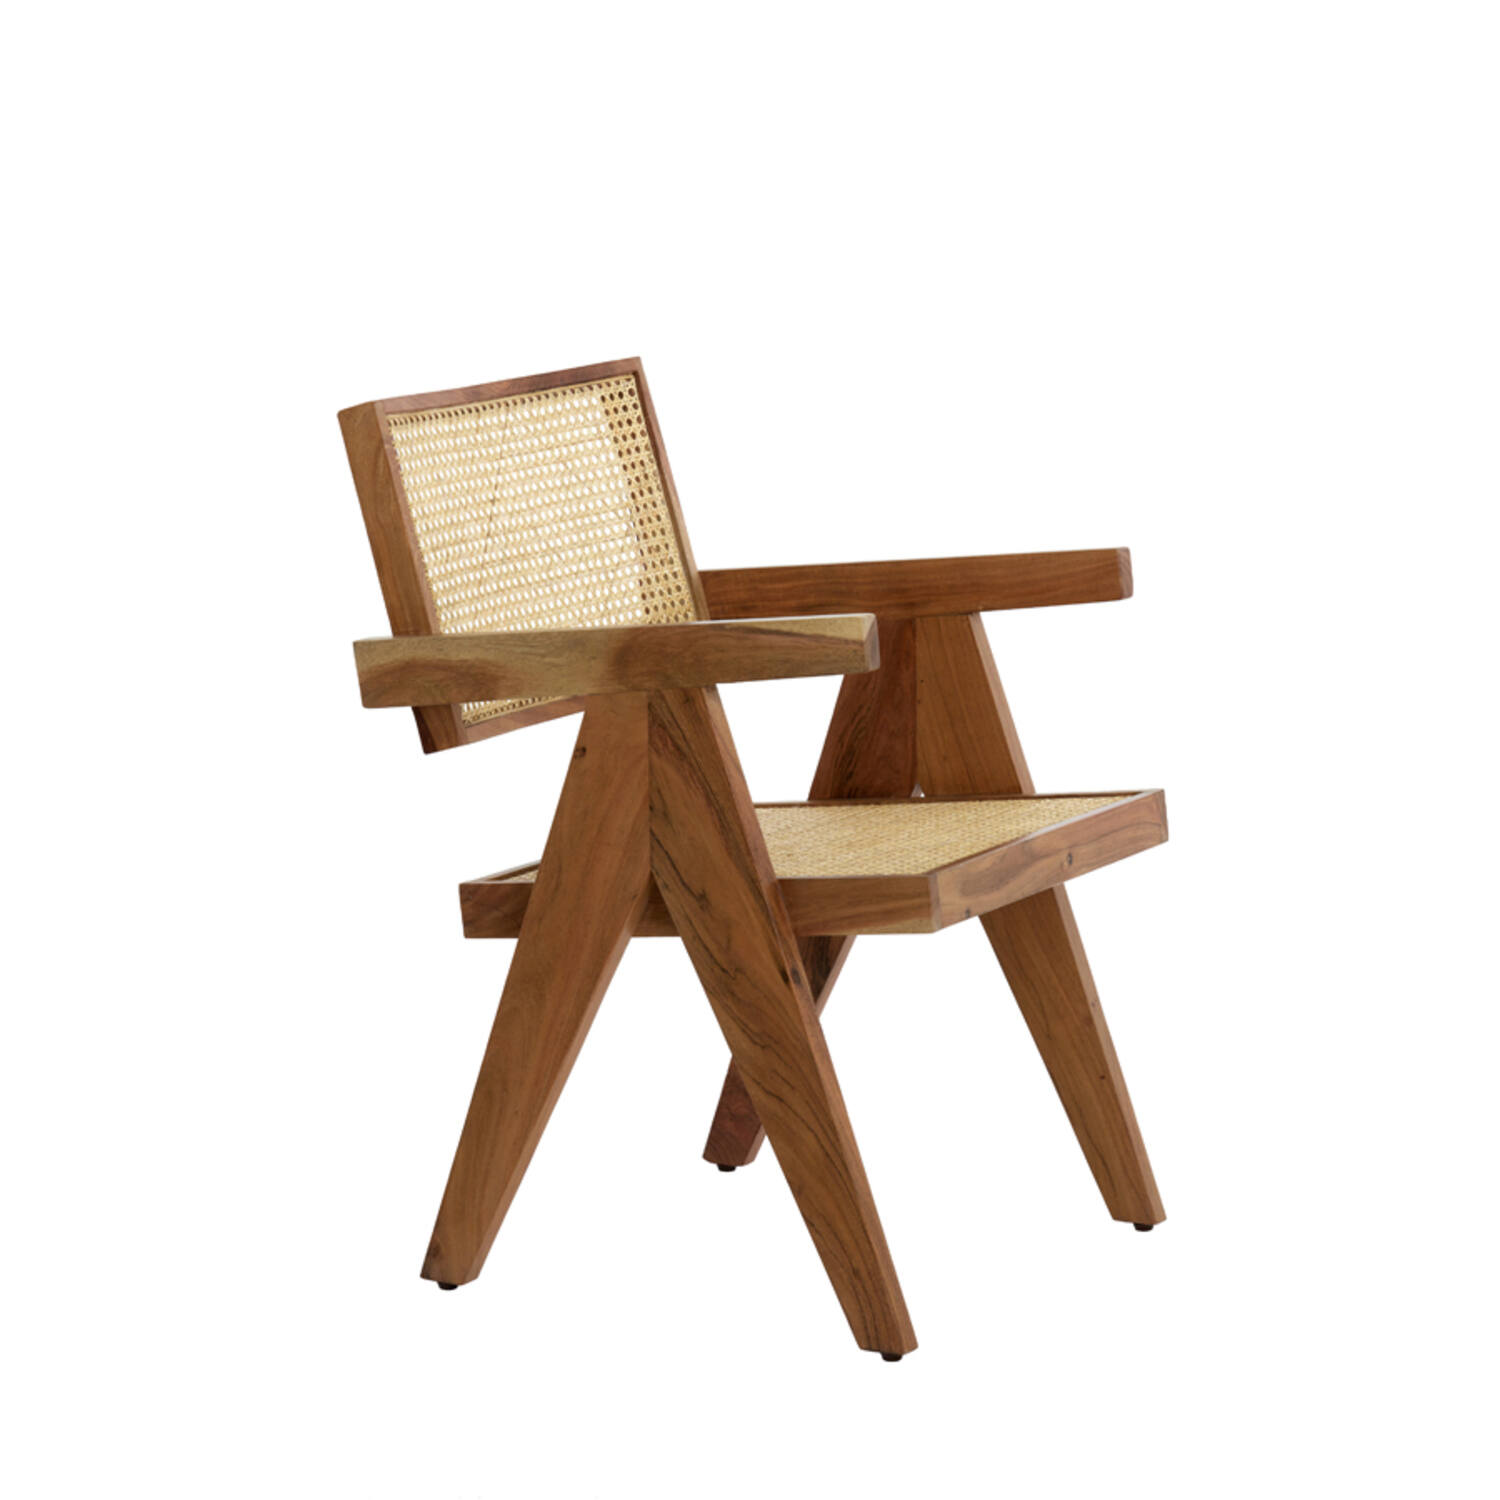 Chair 56x53x79 cm MORAZAN wood natural+rattan natural